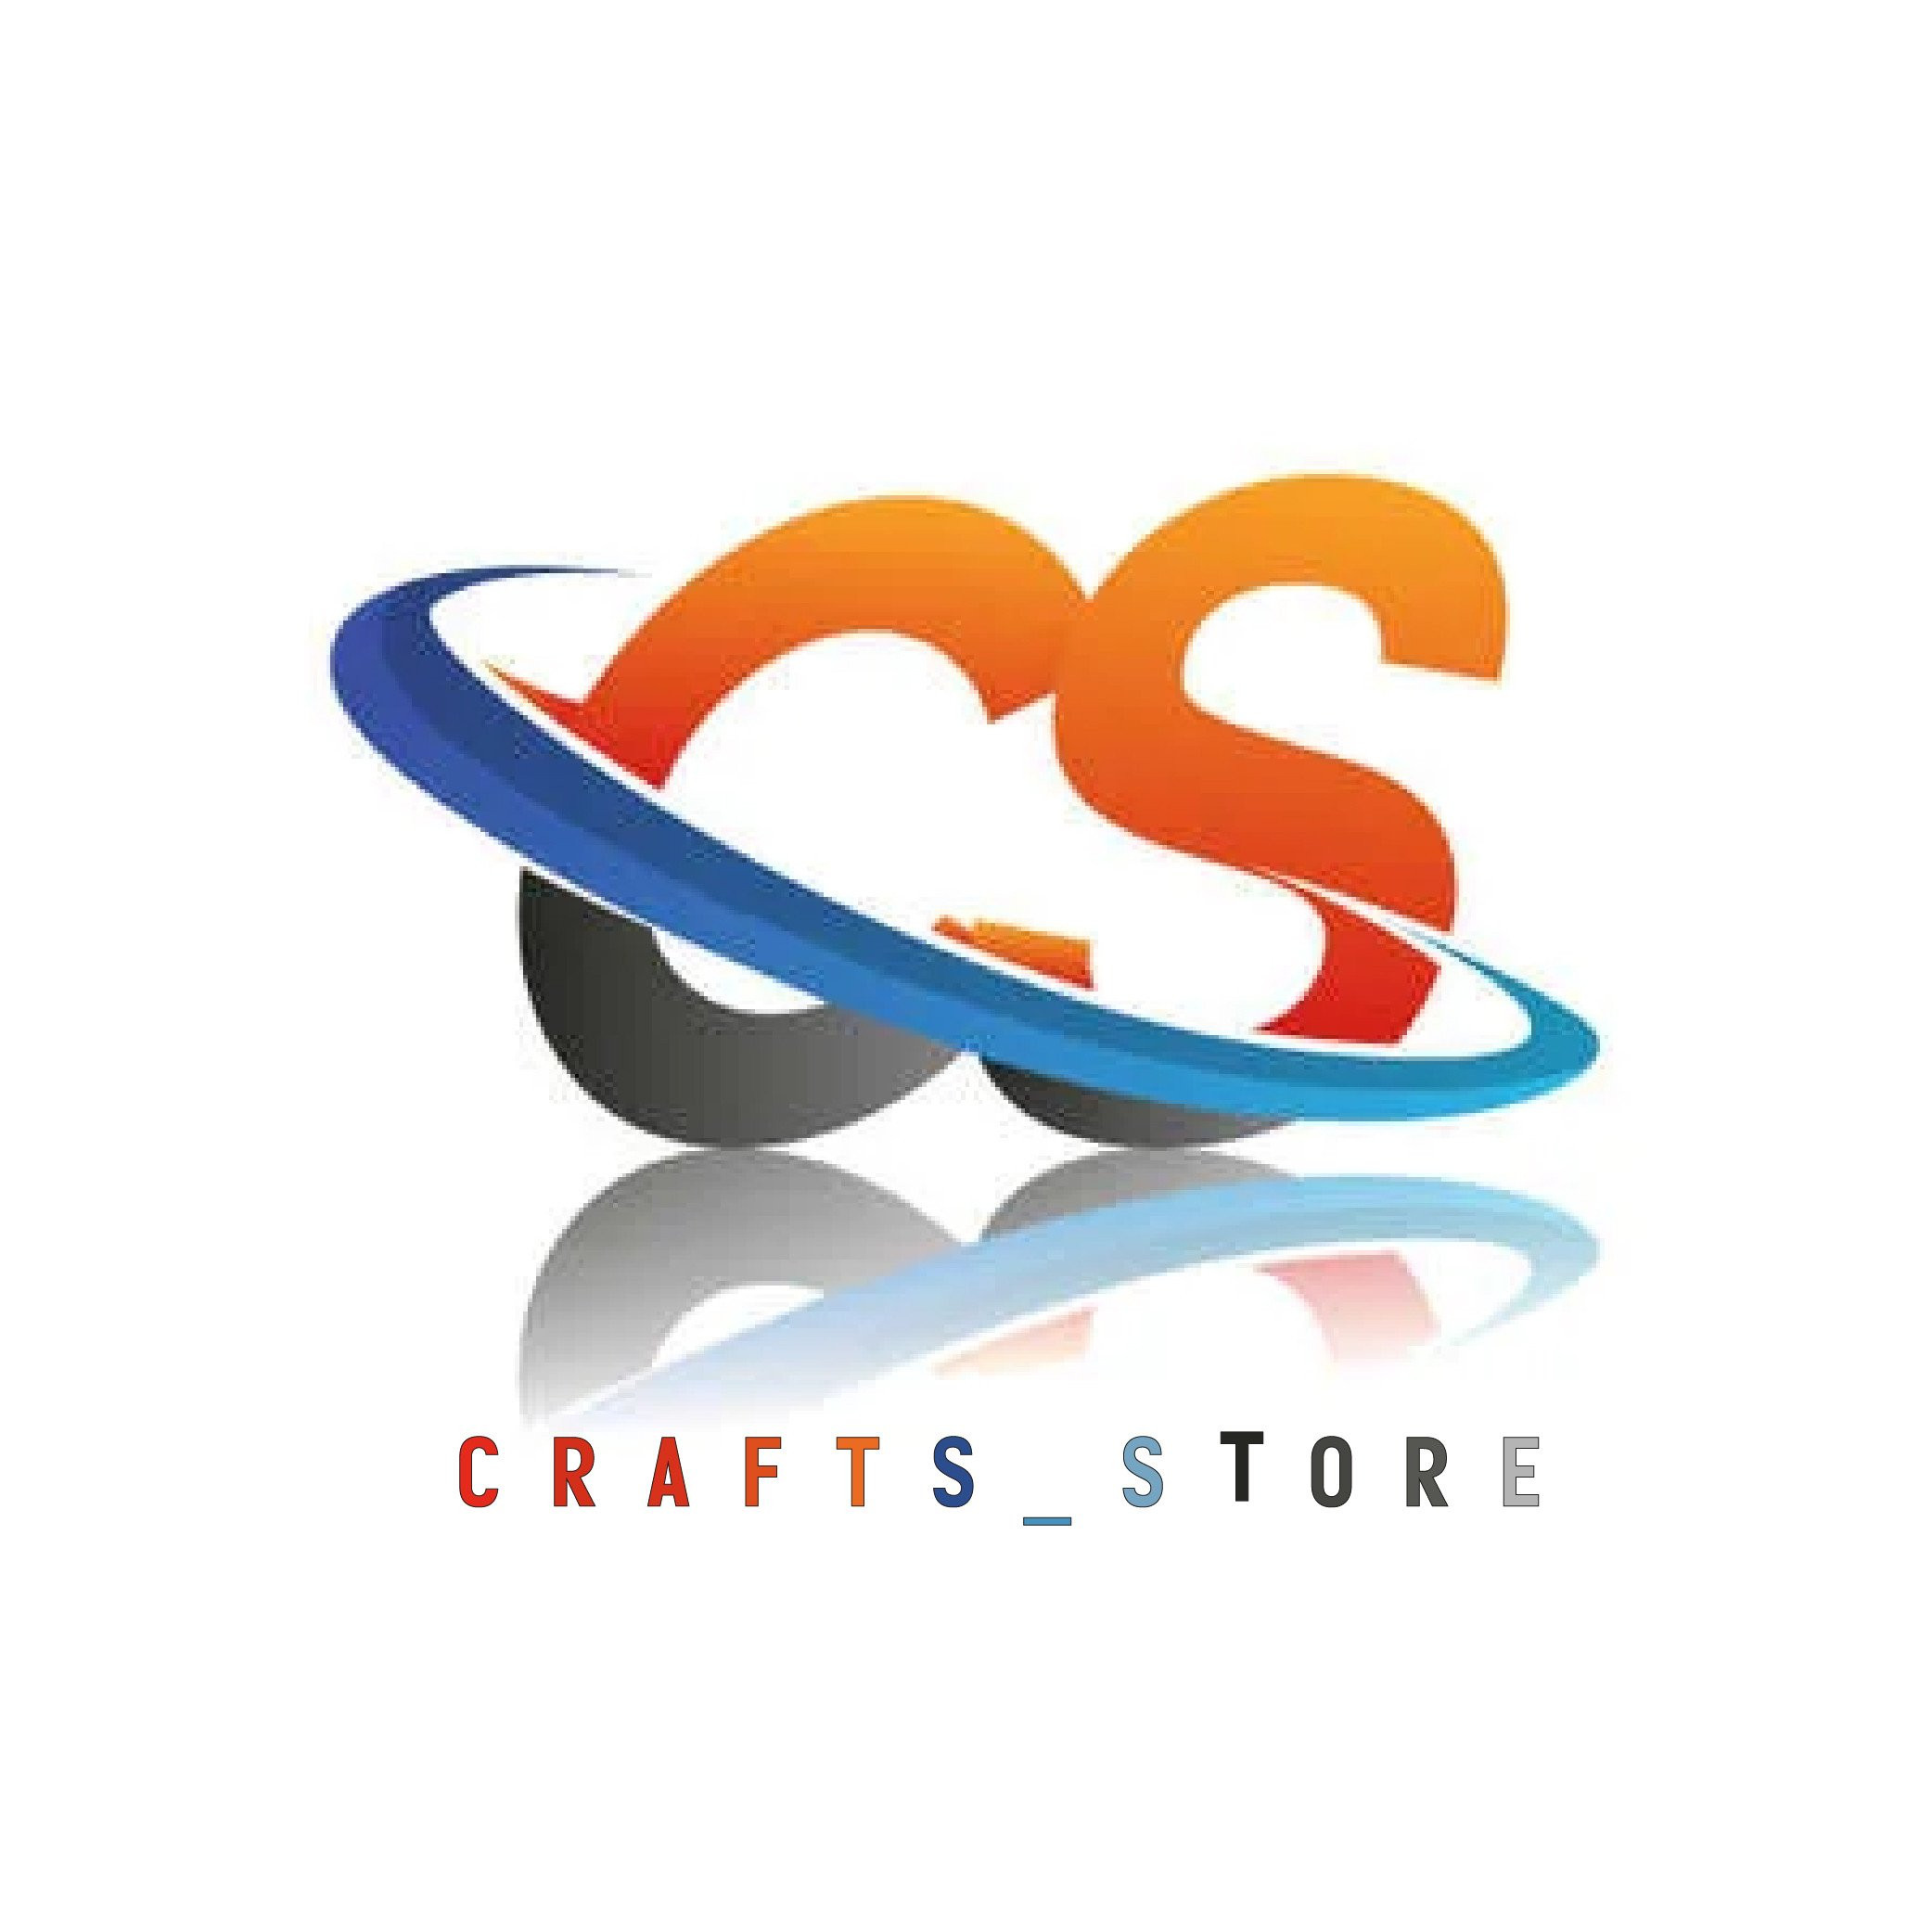 Crafts_Store's profile picture